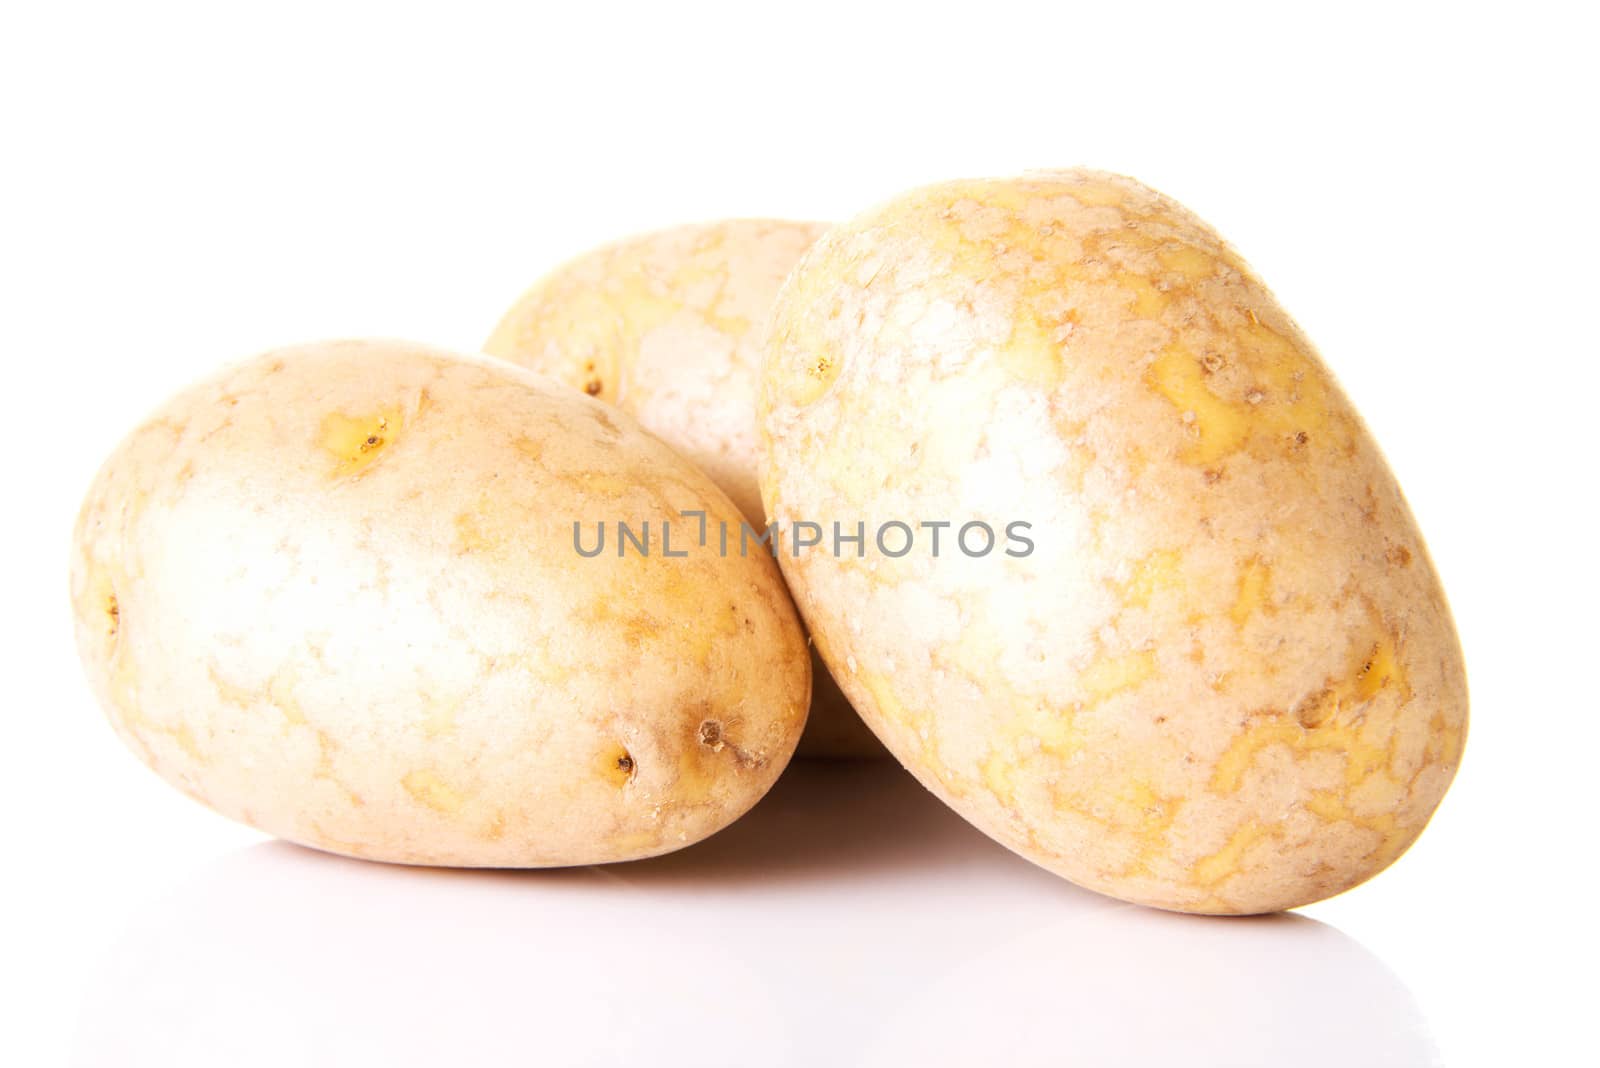 Fresh potatoes. Over white background.